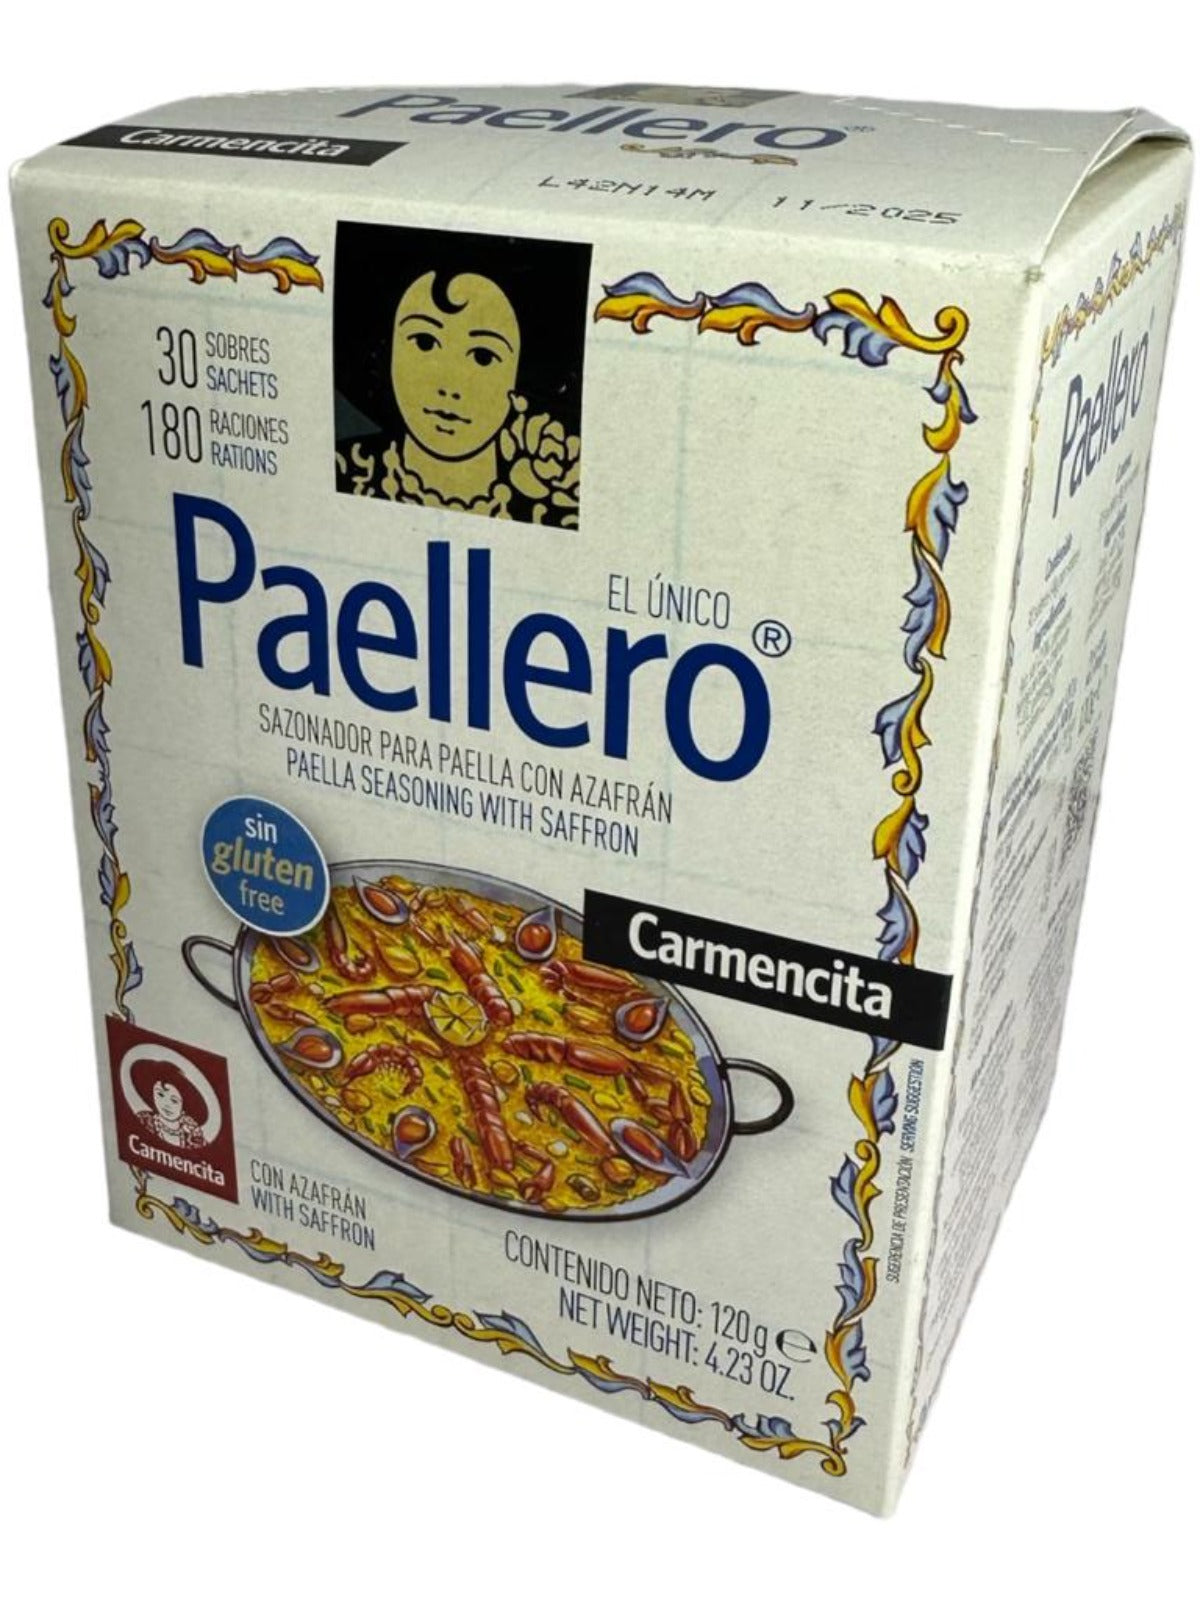 Carmencita Paellero Paella Mix 120g